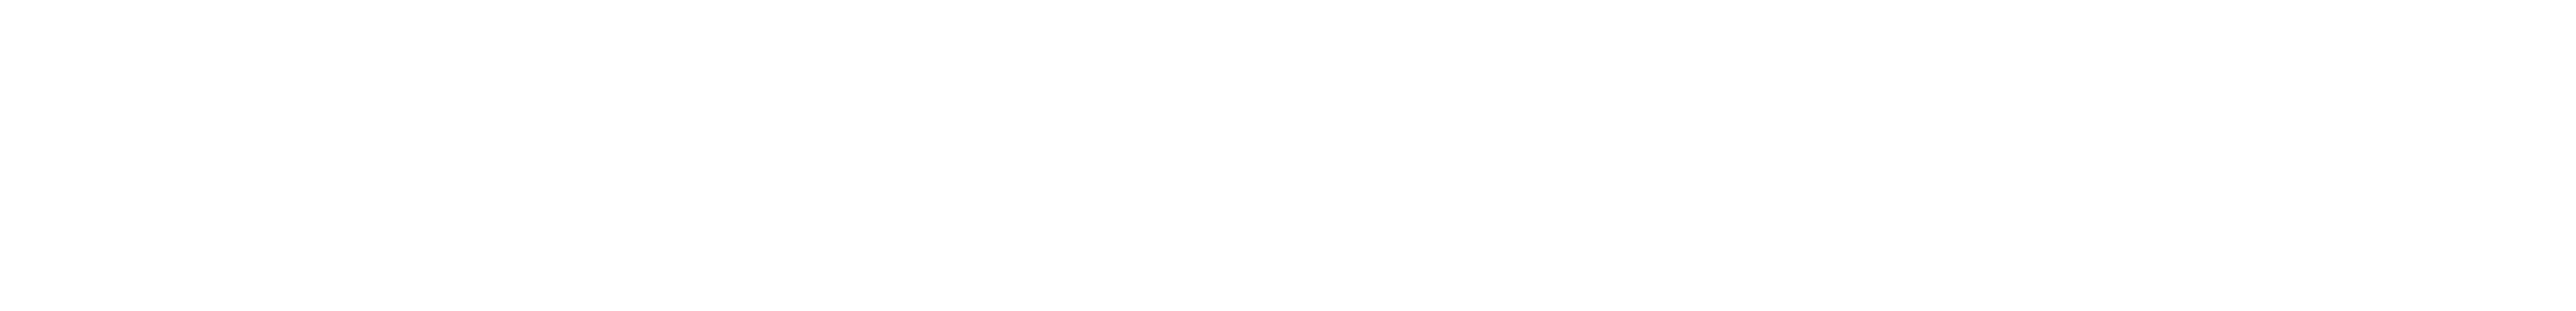 Databar-logo